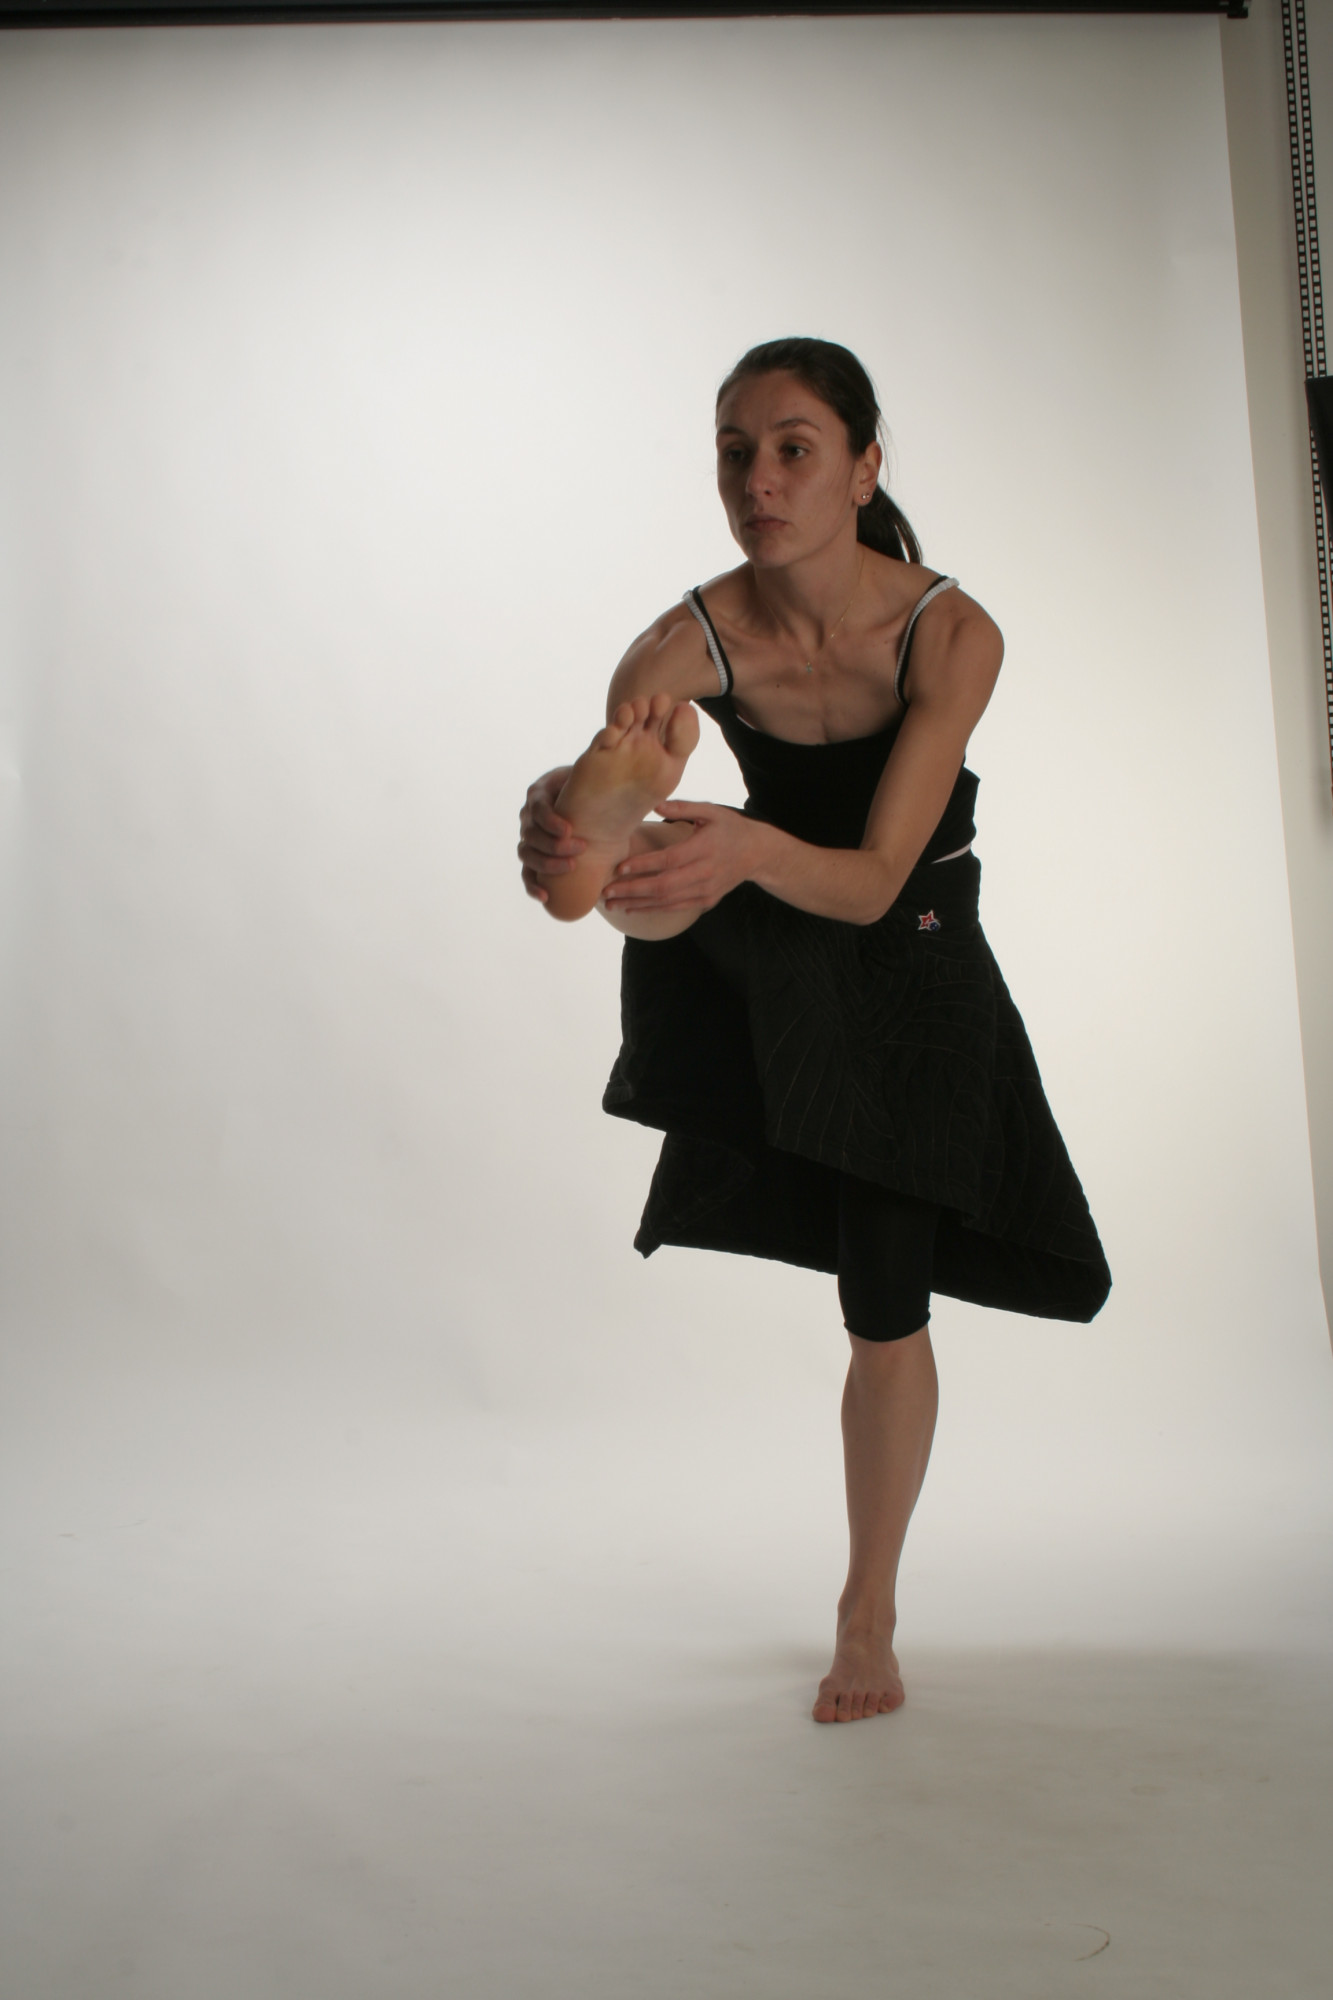 Female dancer in a black dress standing on one leg